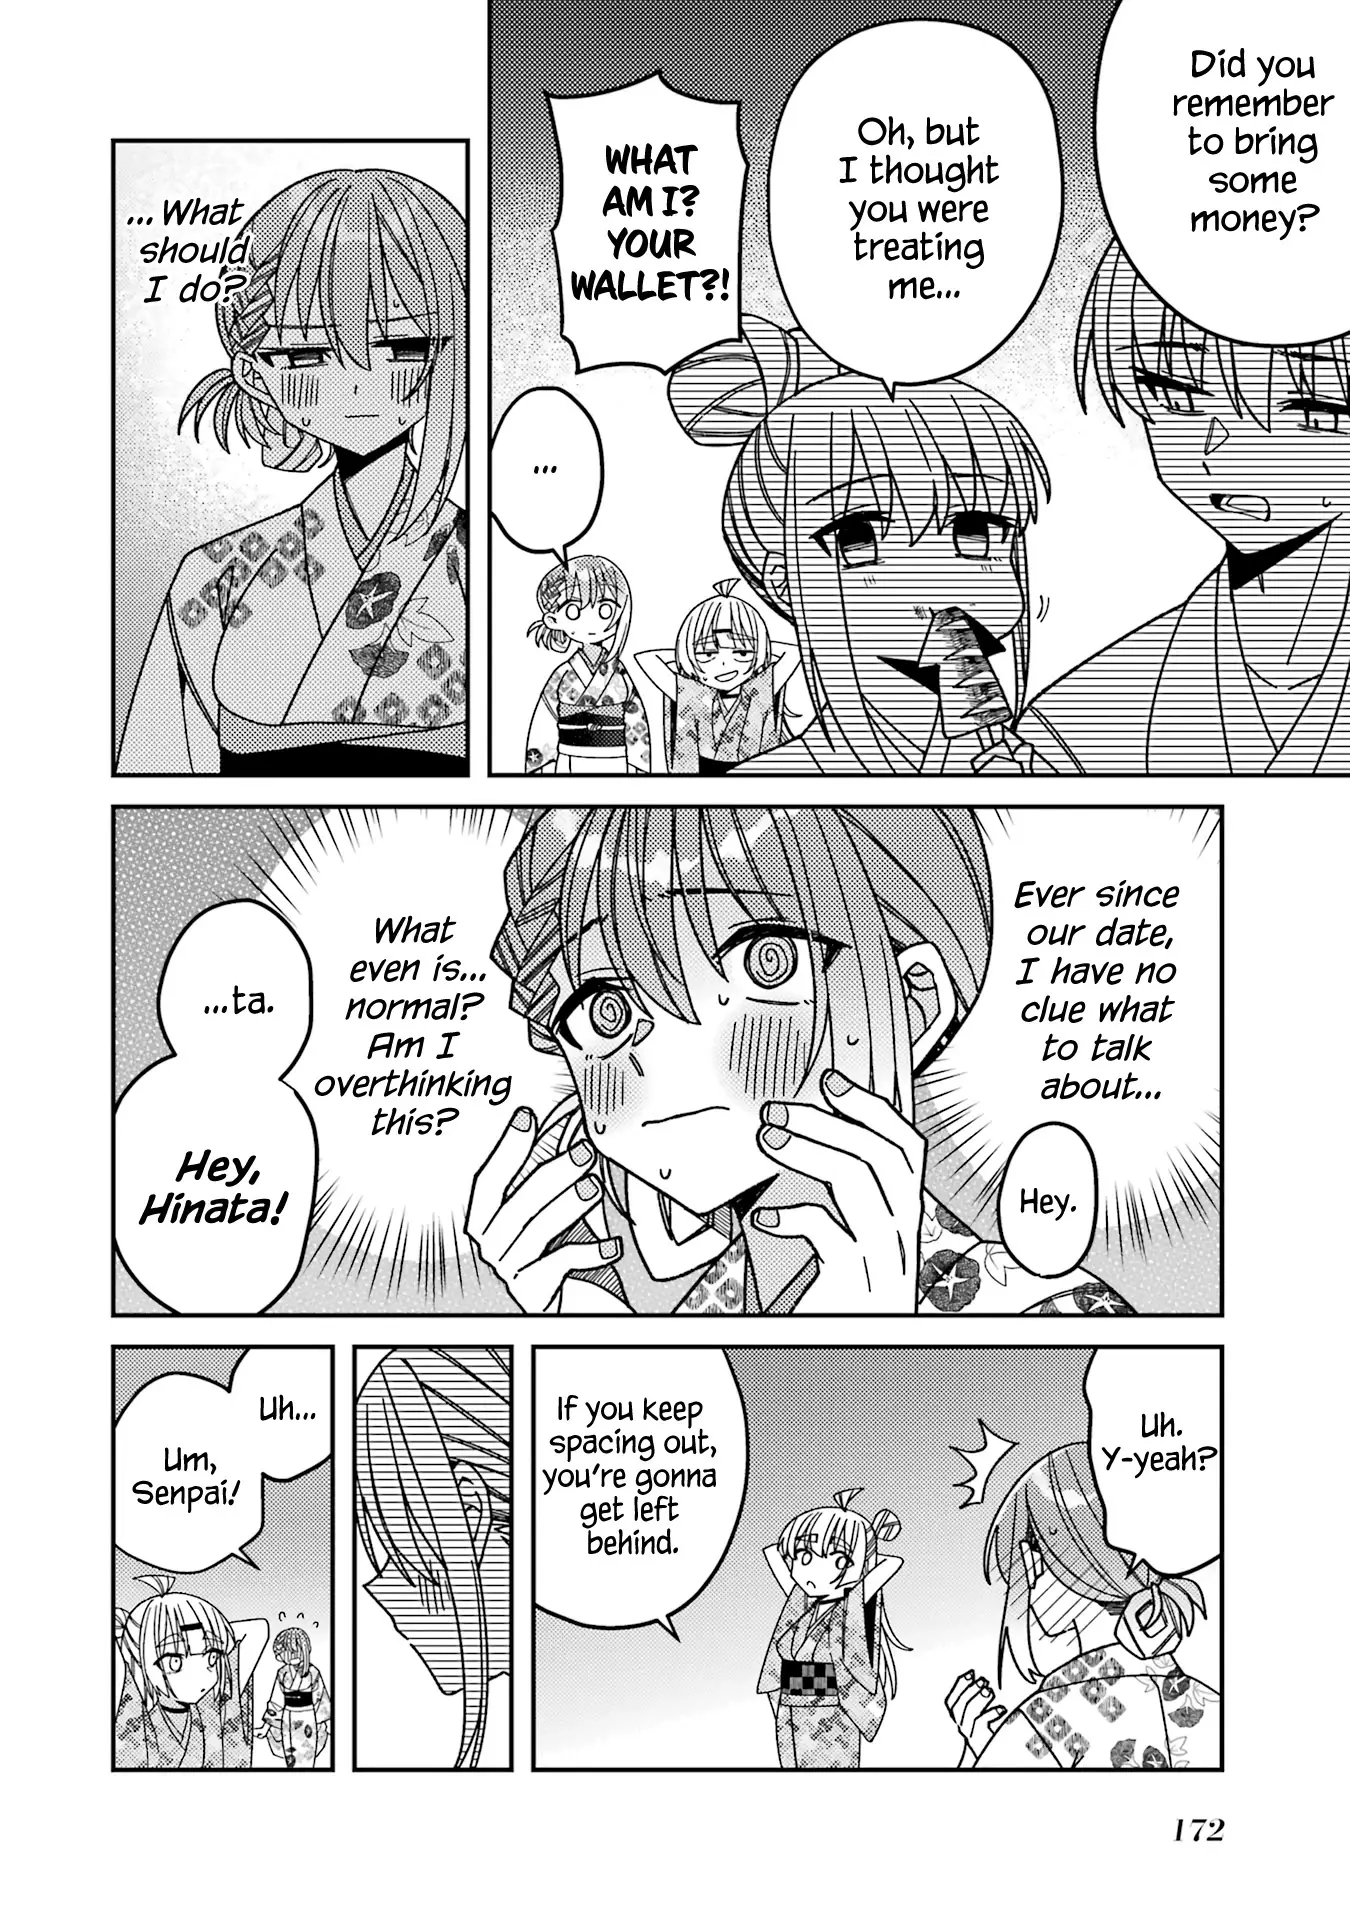 Unparalleled Mememori-Kun - 12 page 6-033c77c3